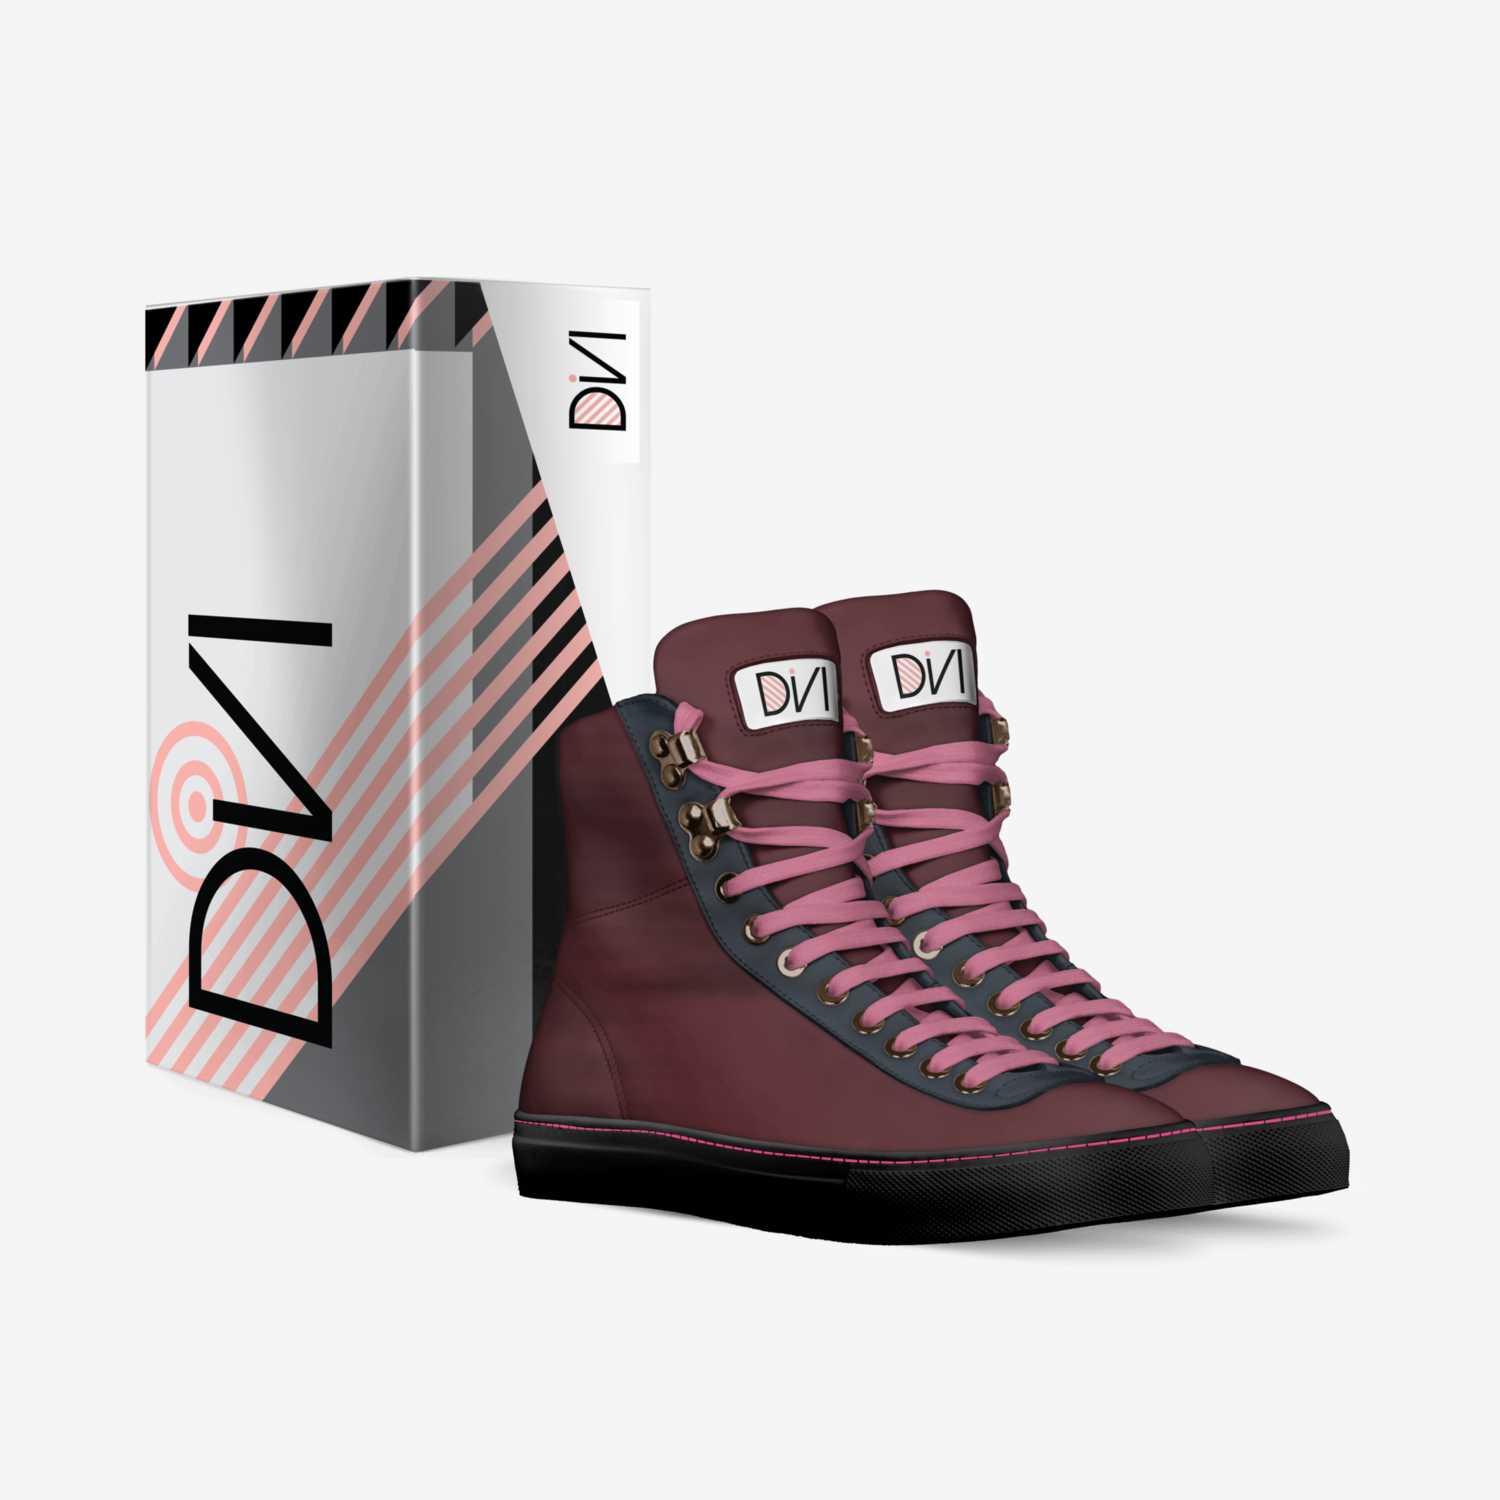 DiVi custom made in Italy shoes by Dan Brokenhouse | Box view